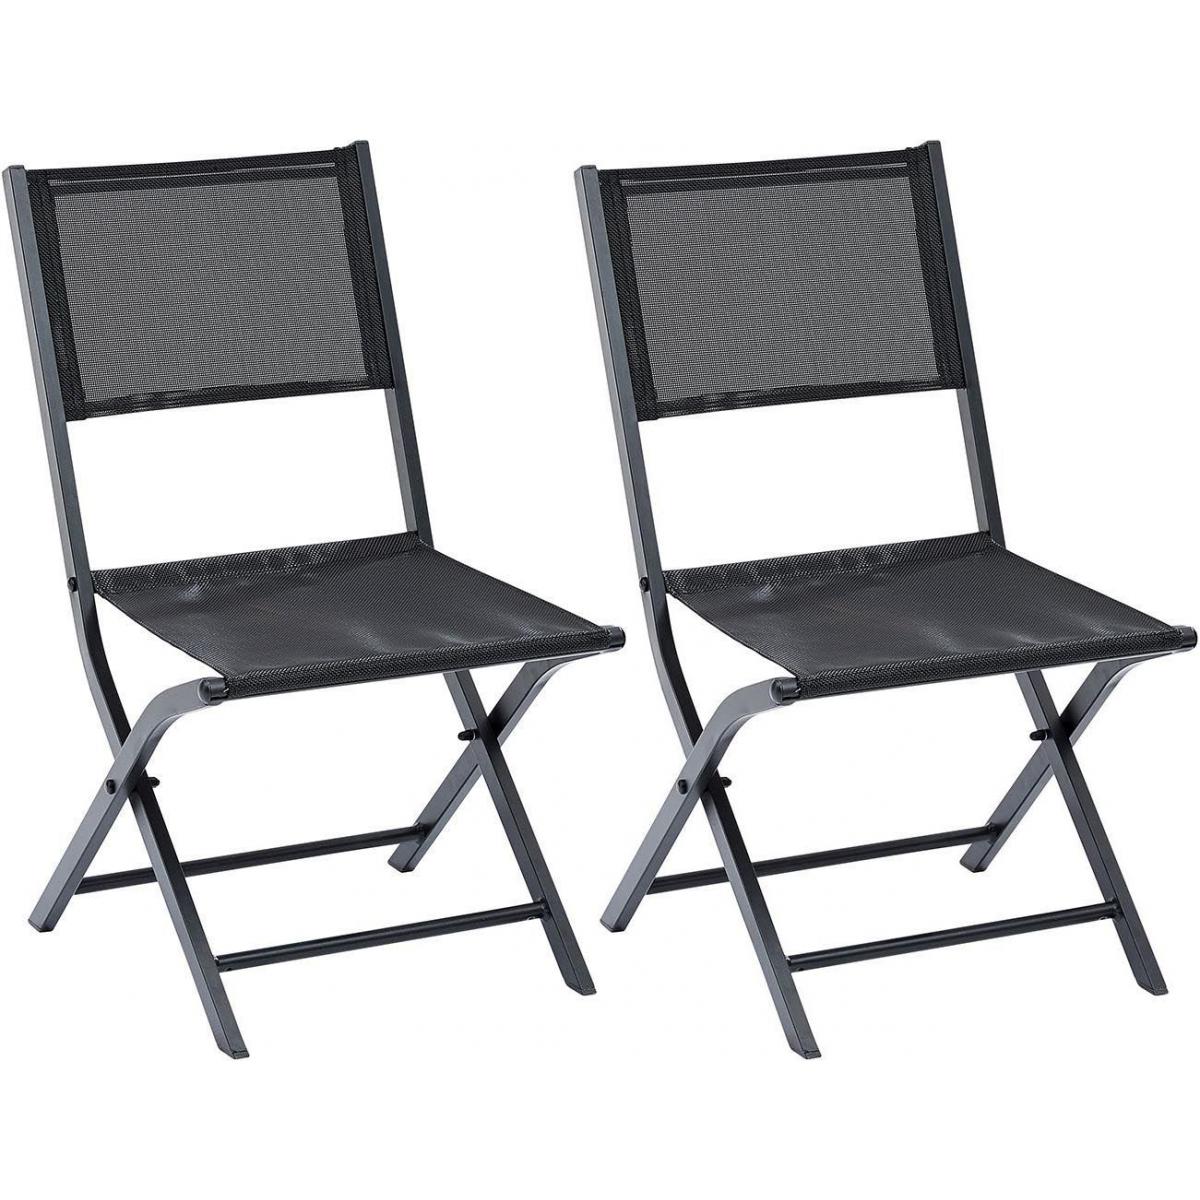 Wilsa Garden - Chaise pliante Modulo (Lot de 2) - Chaises de jardin